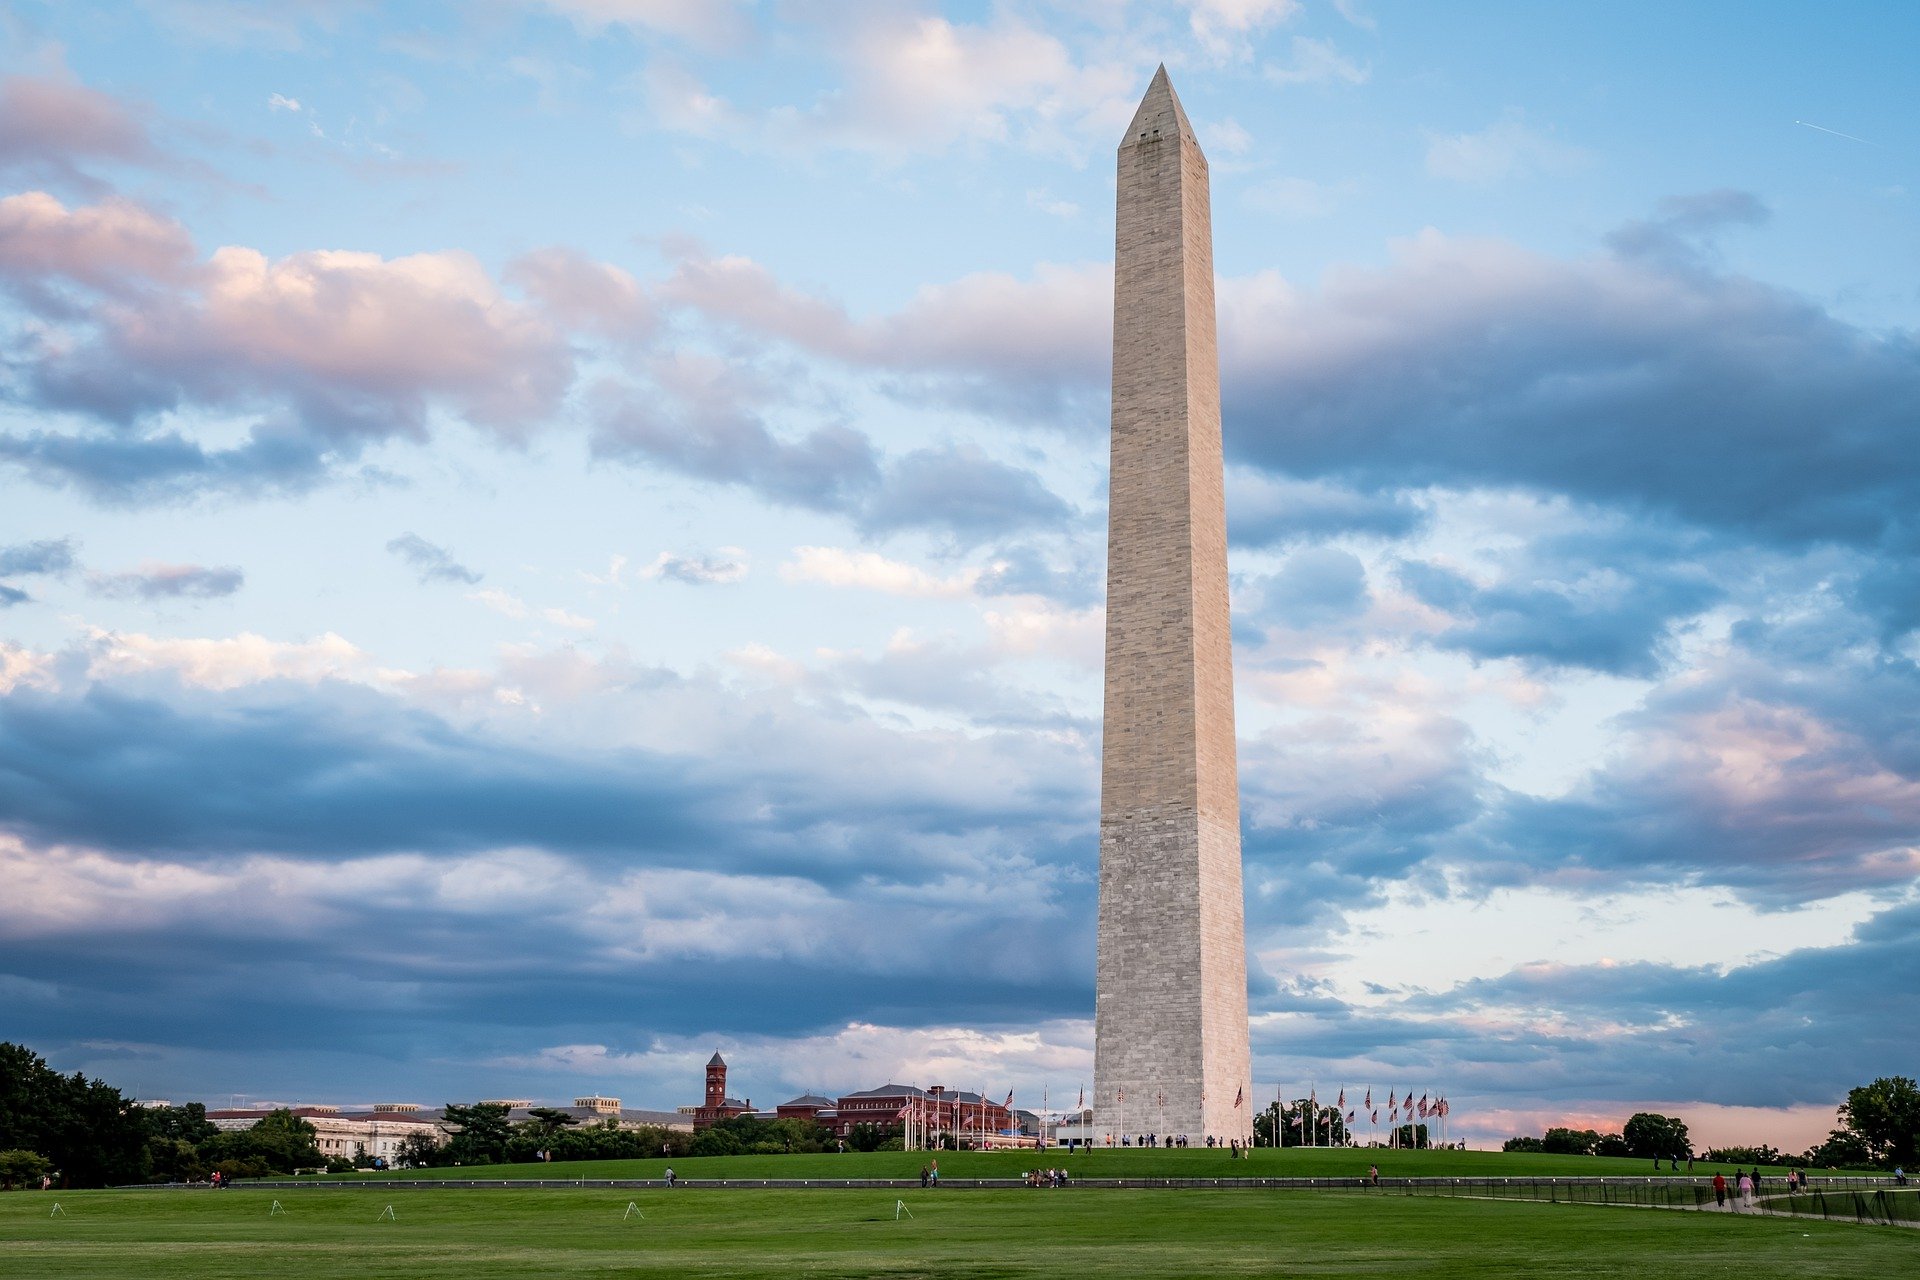 The Washington Monument against a beautiful blue sky